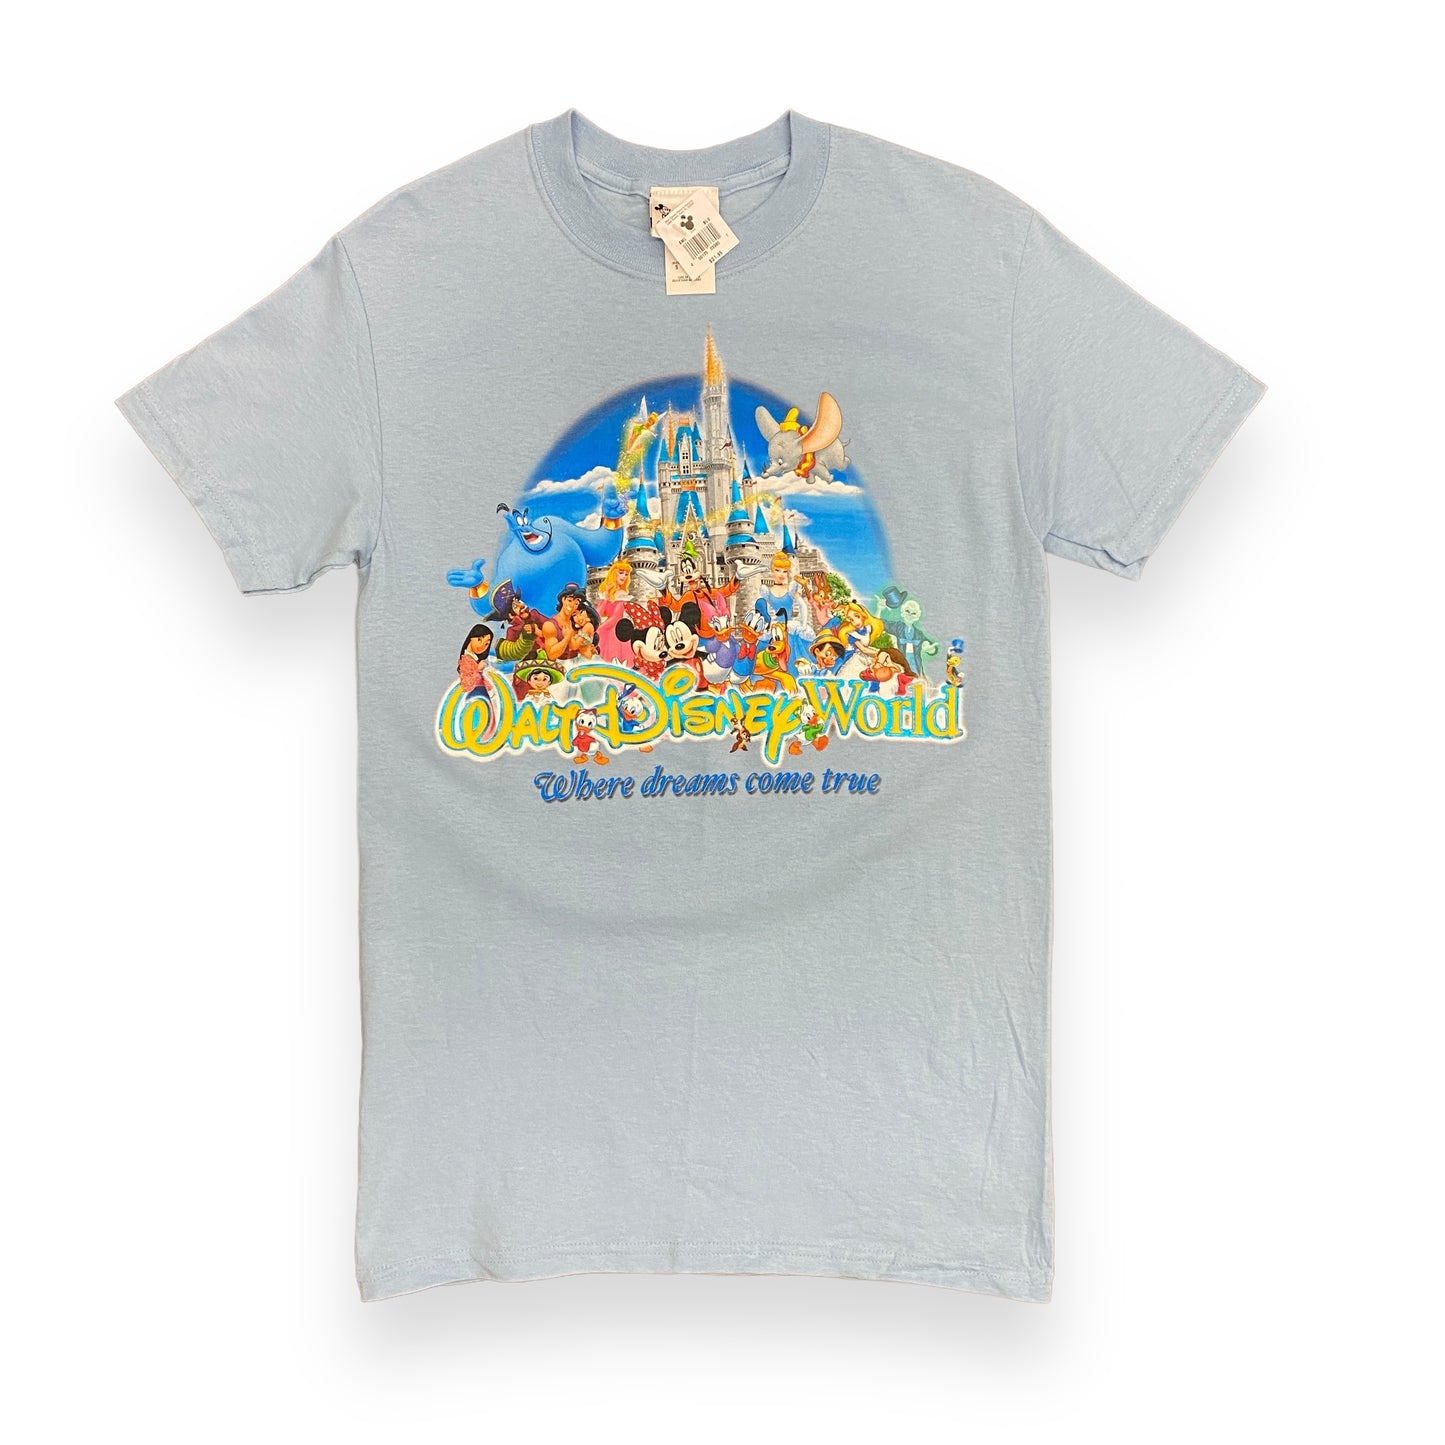 NWT Vintage Walt Disney World "Where Dreams Come True" Tee - Size Small